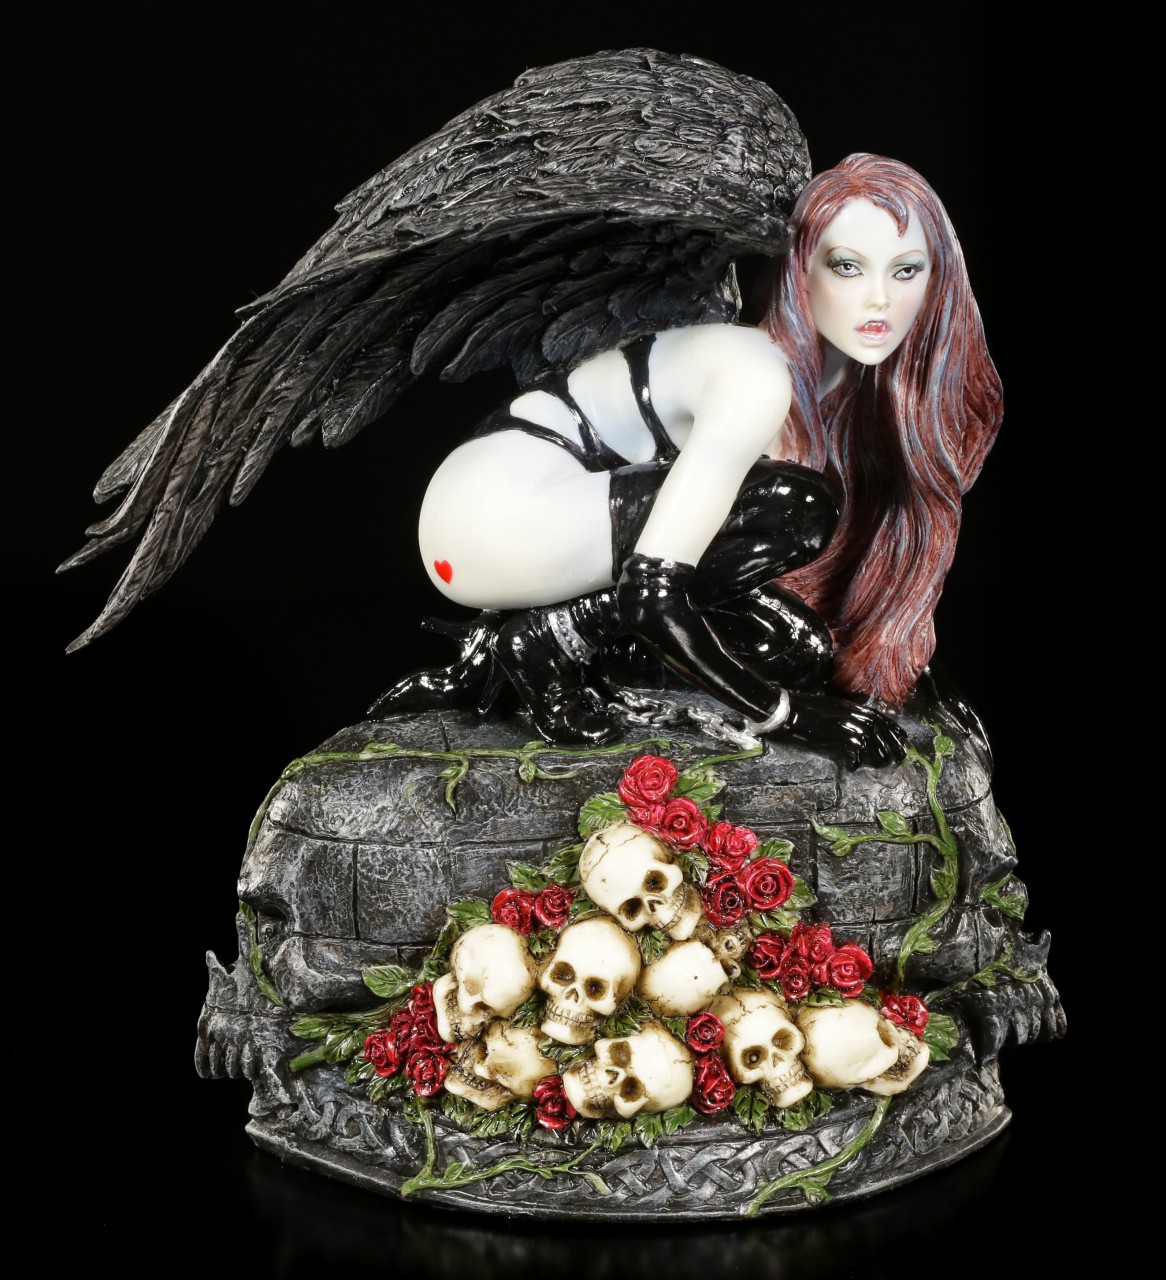 Vampire Figurine - Female Vampire with Wings